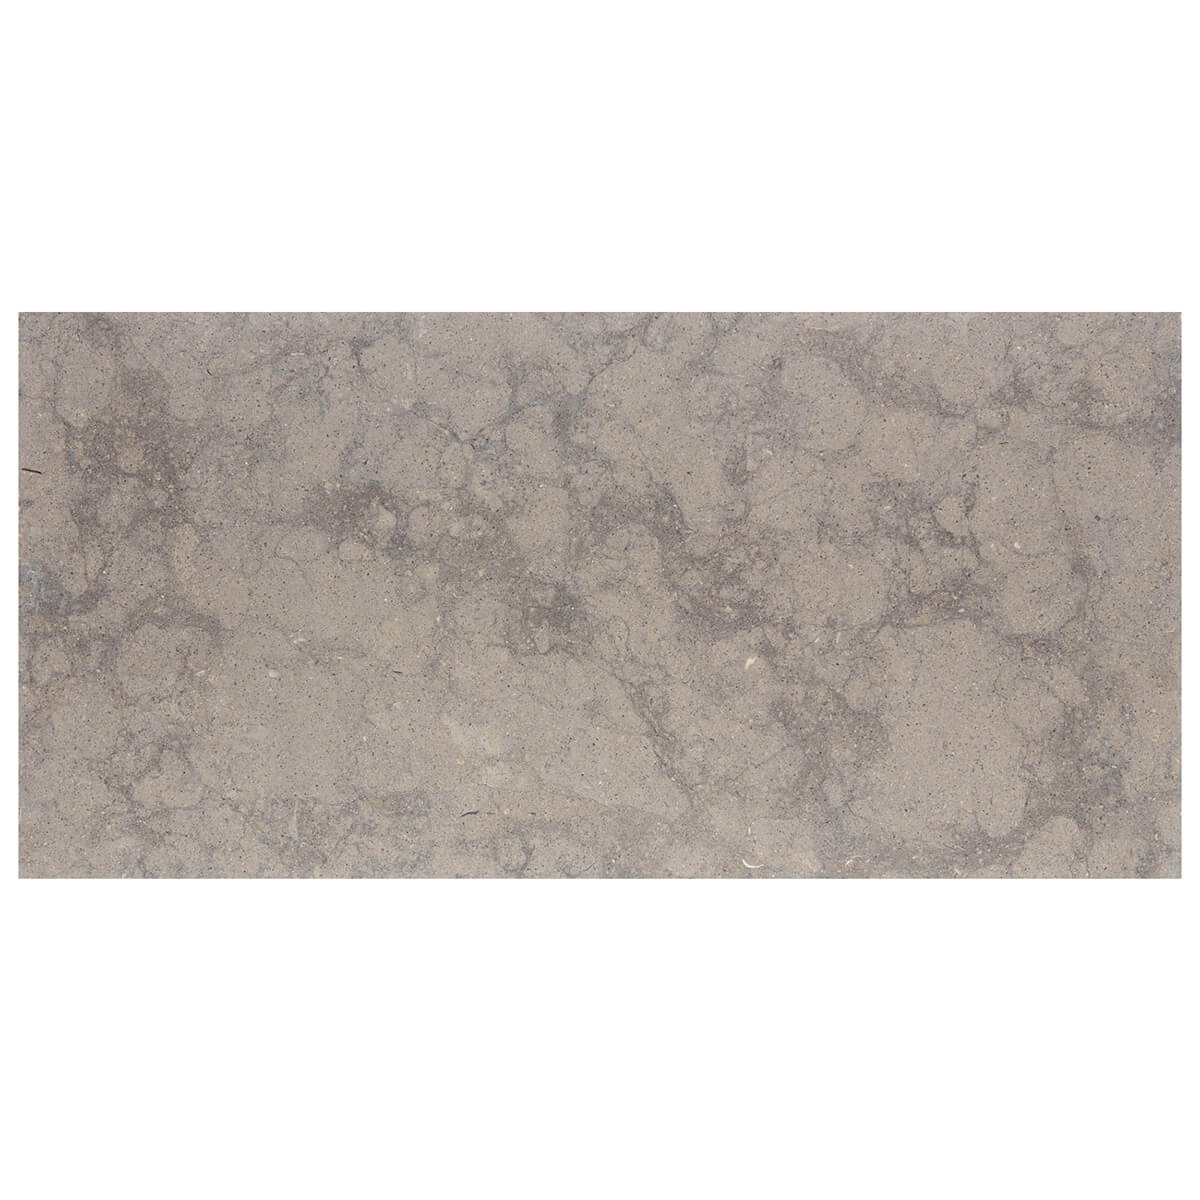 haussmann cote d azur limestone rectangle natural stone field tile 12x24 honed